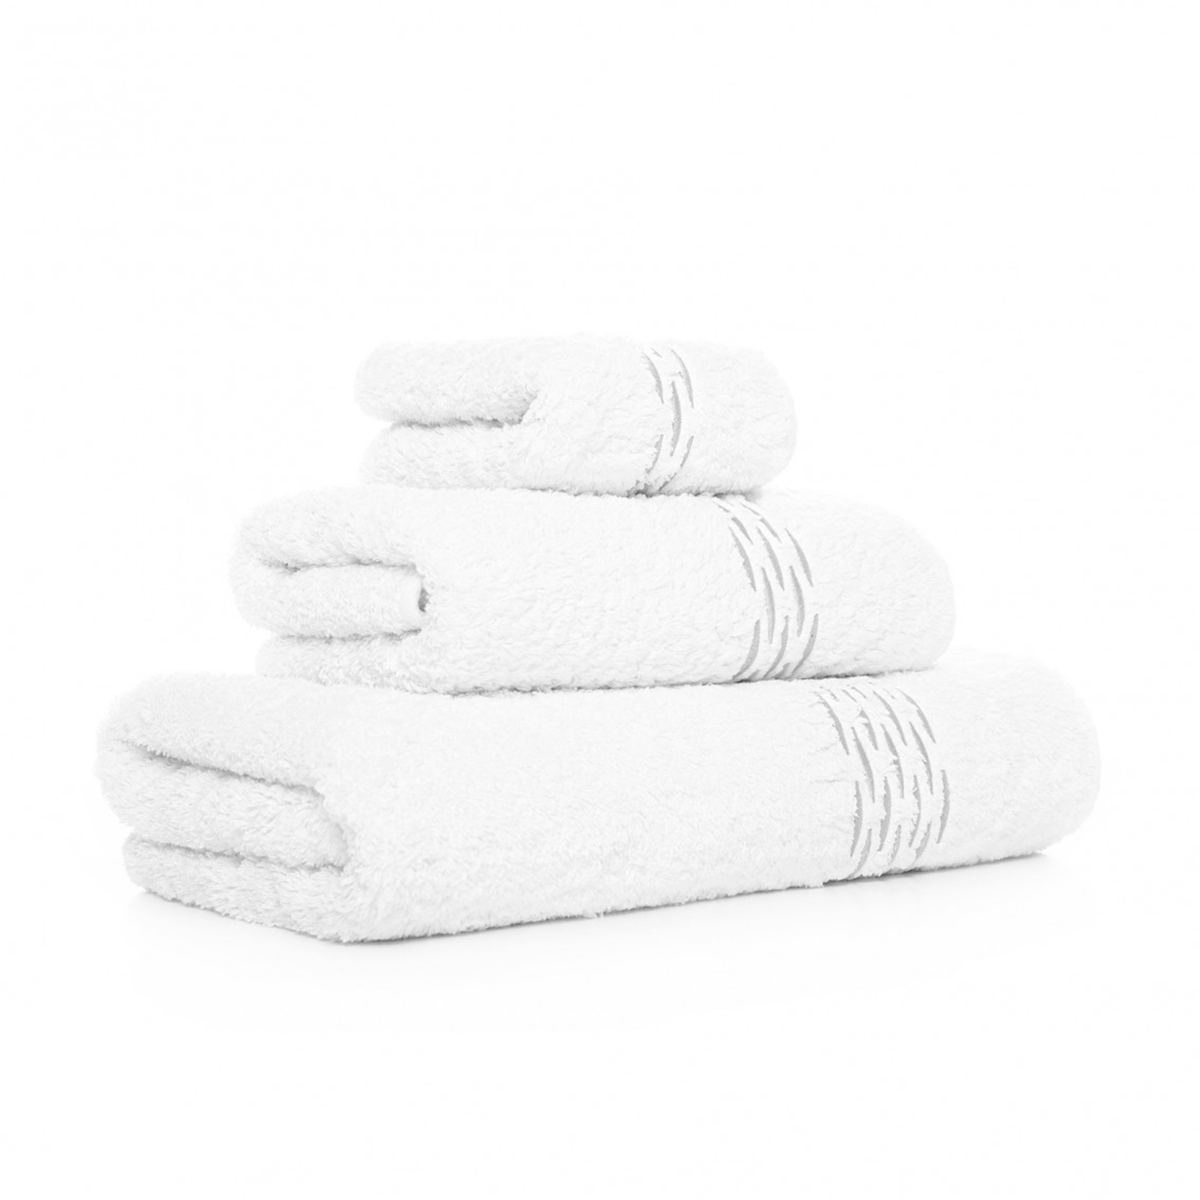 Corner View of Stack of Graccioza Alhambra Bath Towels in White Silver Color